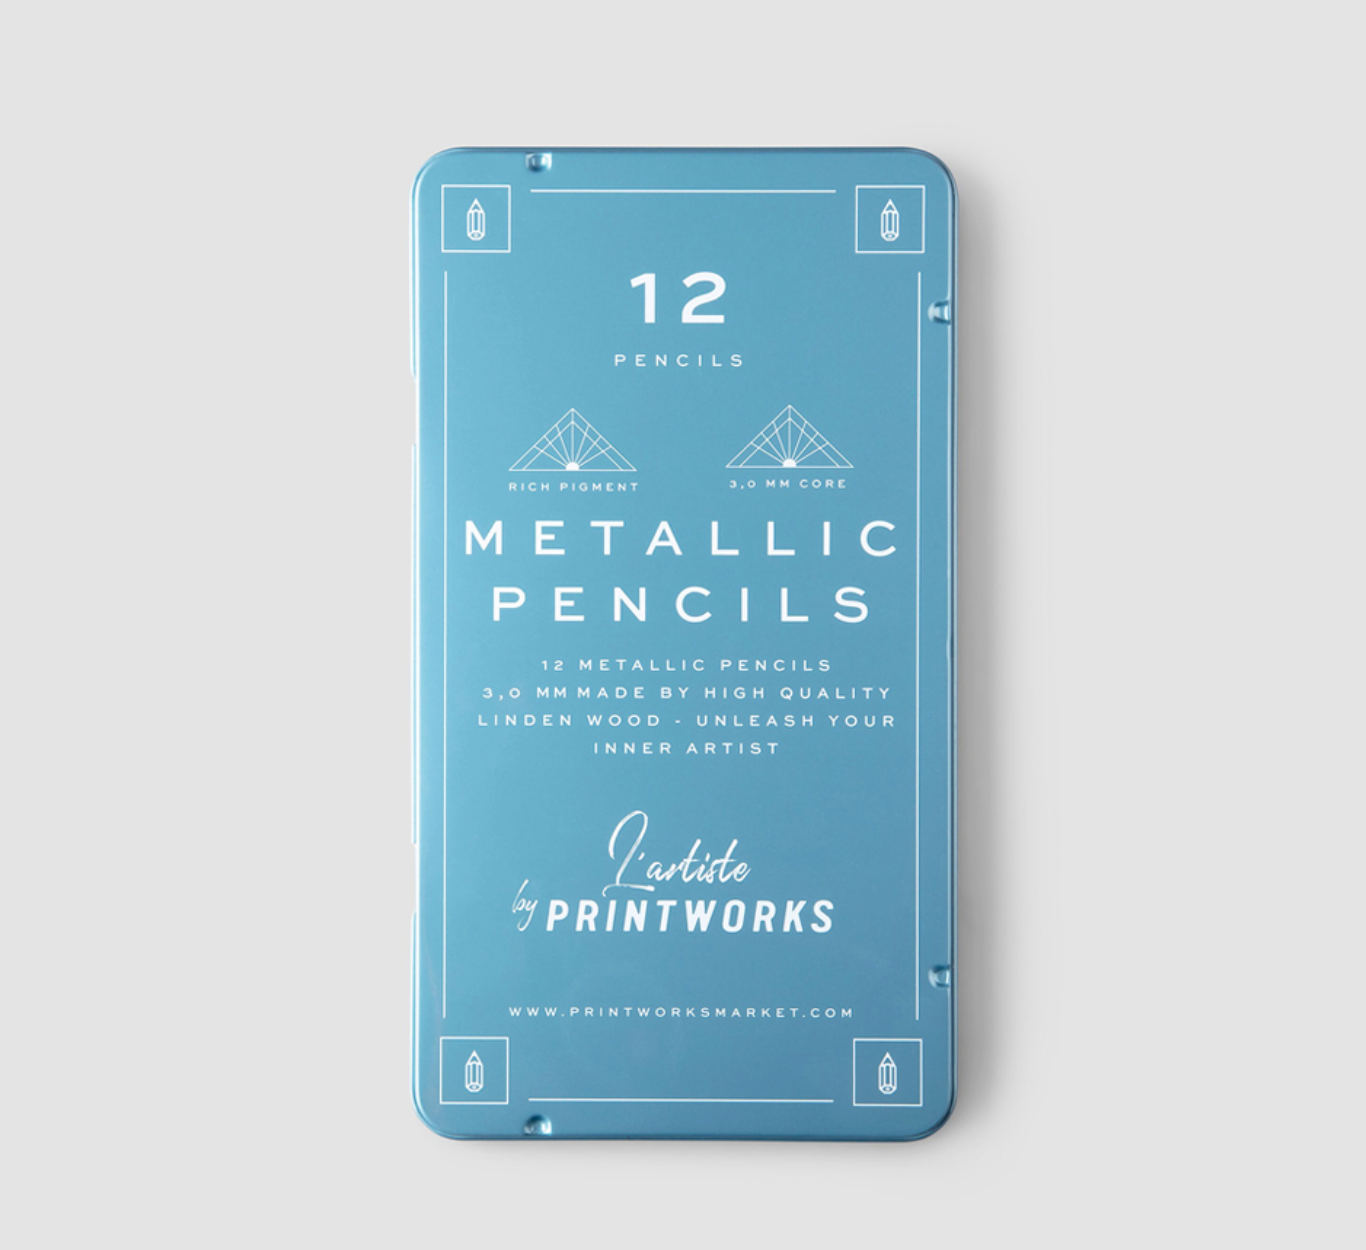 Colored pencils - Metallic